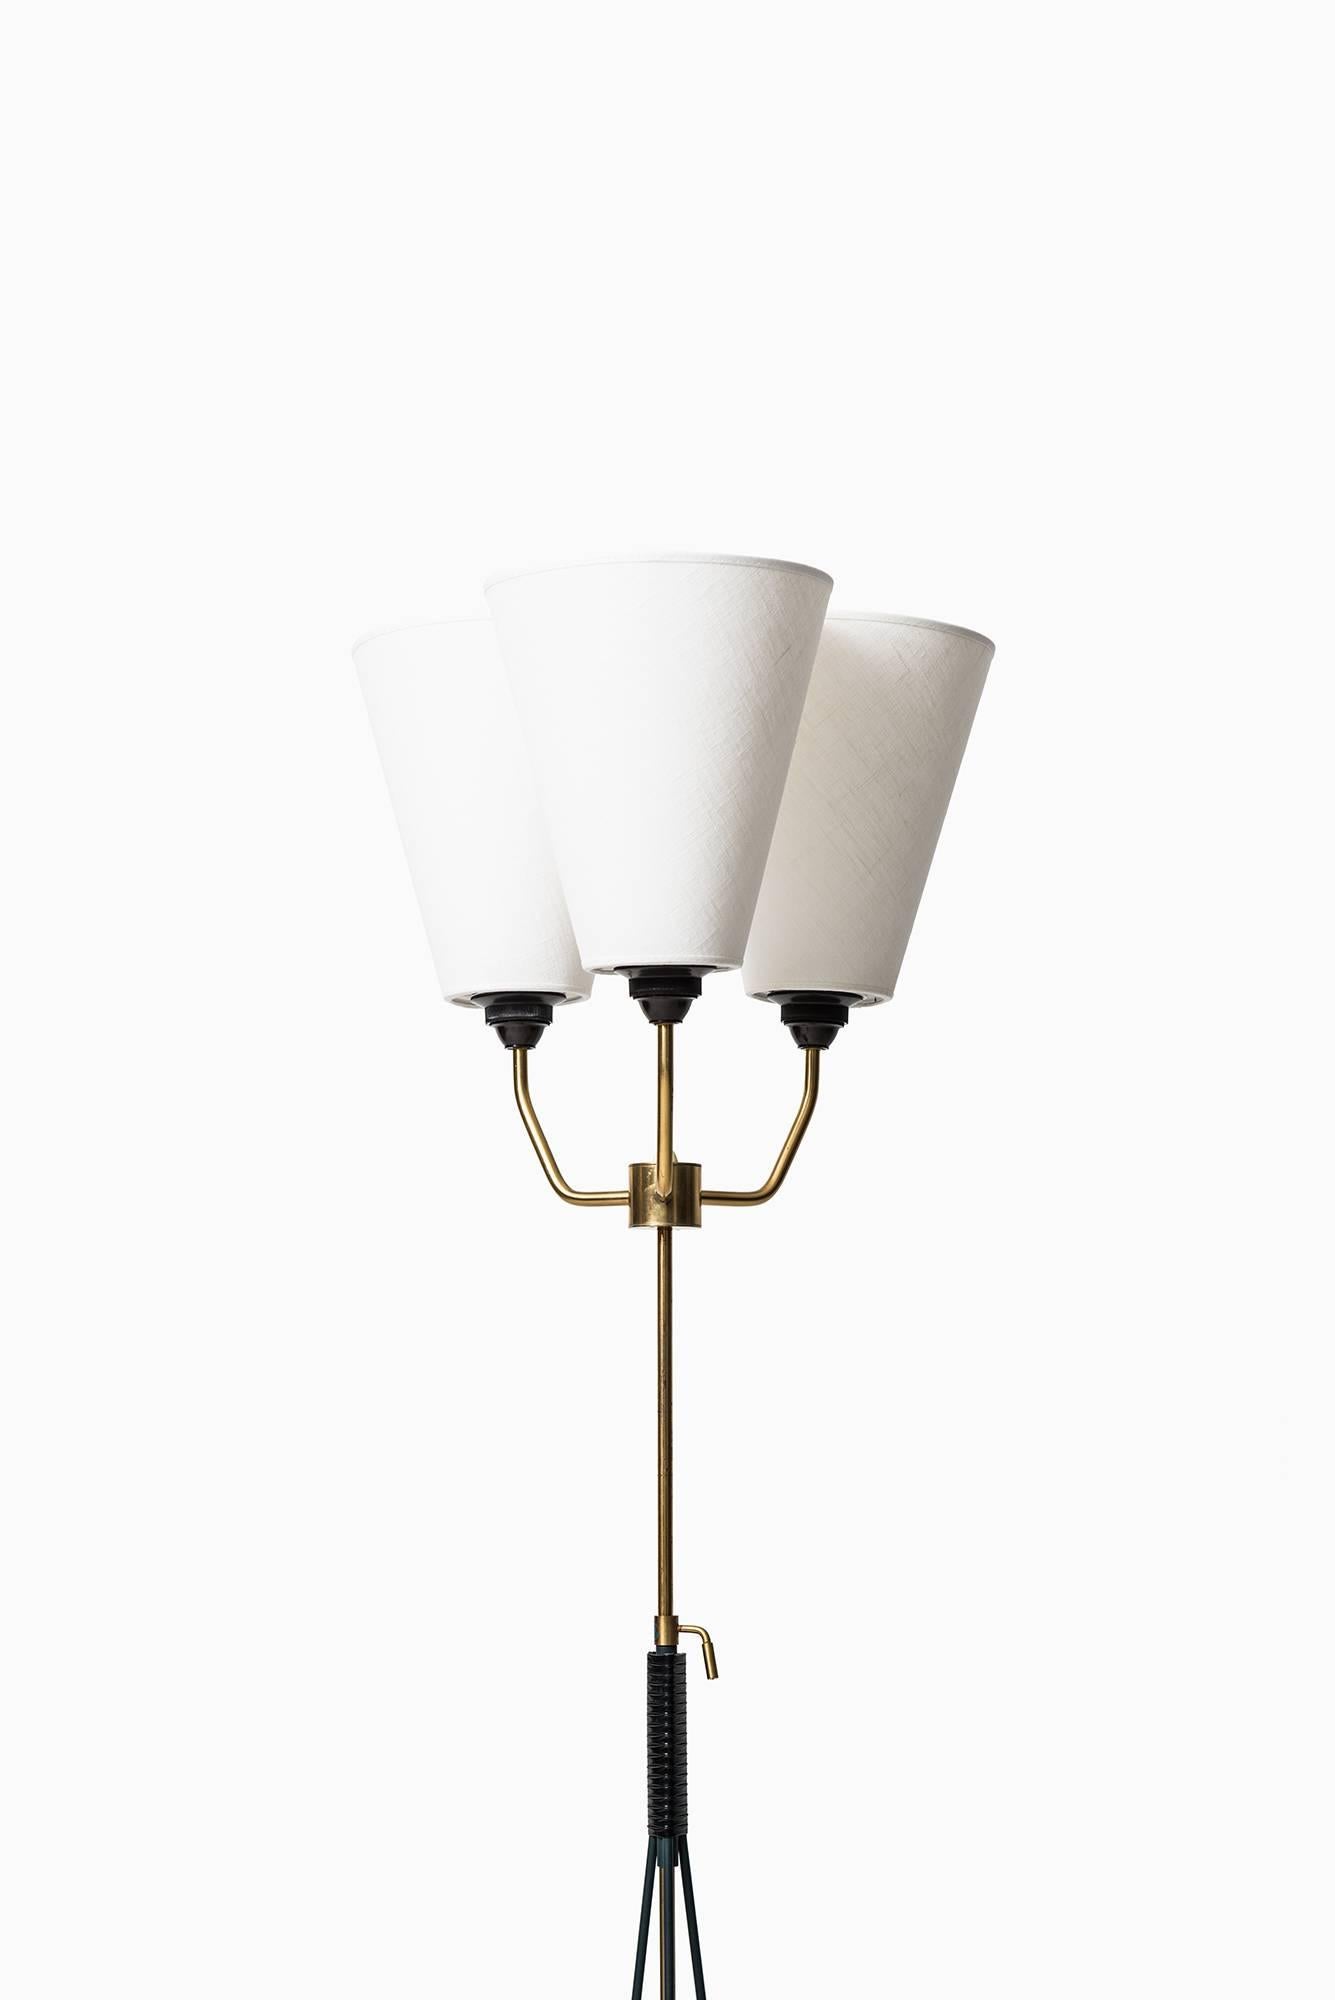 Height adjustable uplight or floor lamp. Produced in Sweden.